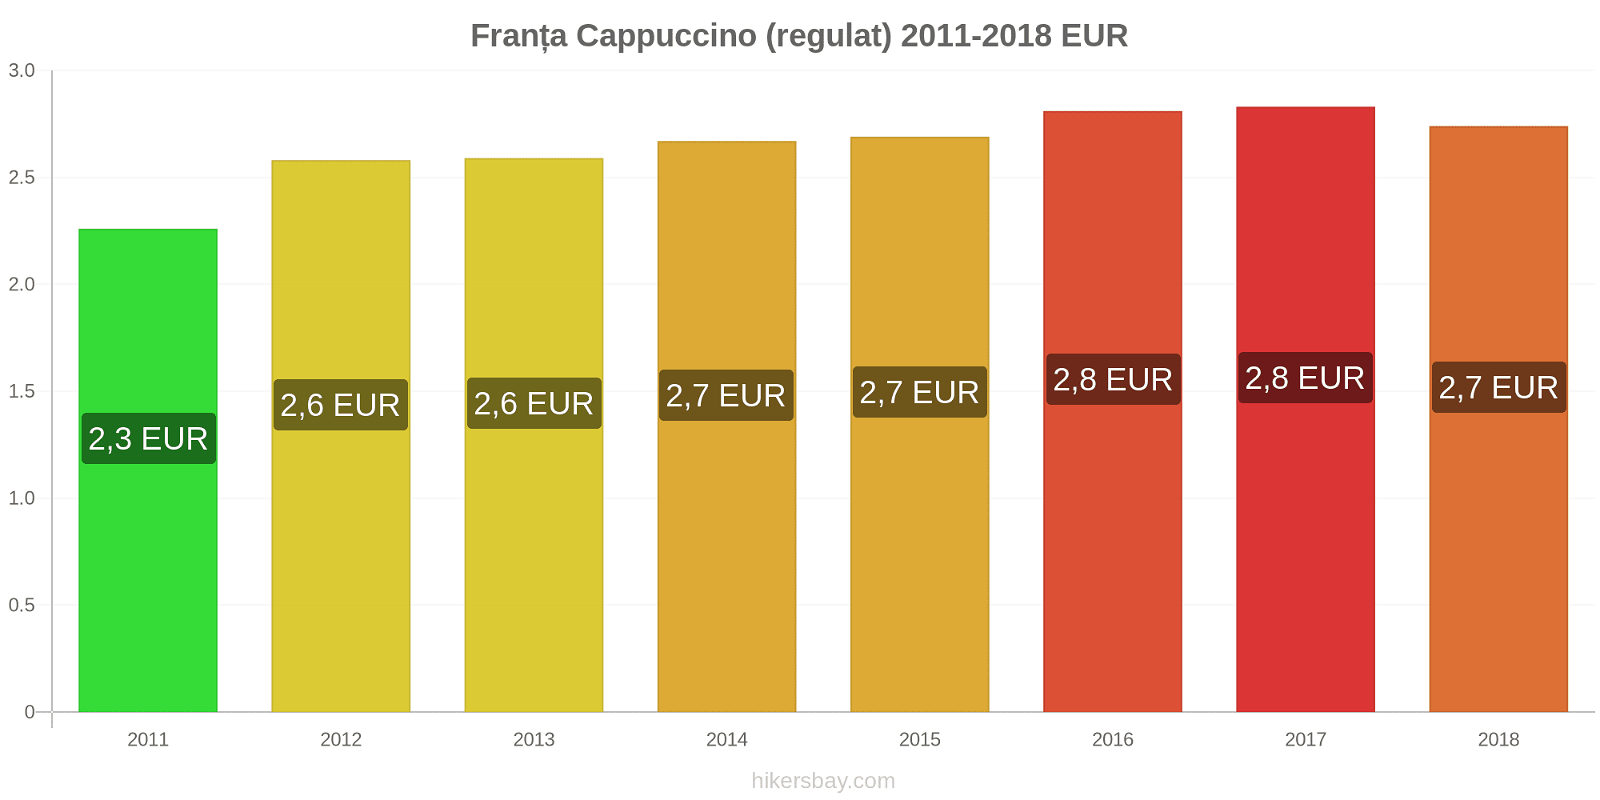 Franța schimbări de prețuri Cappuccino hikersbay.com